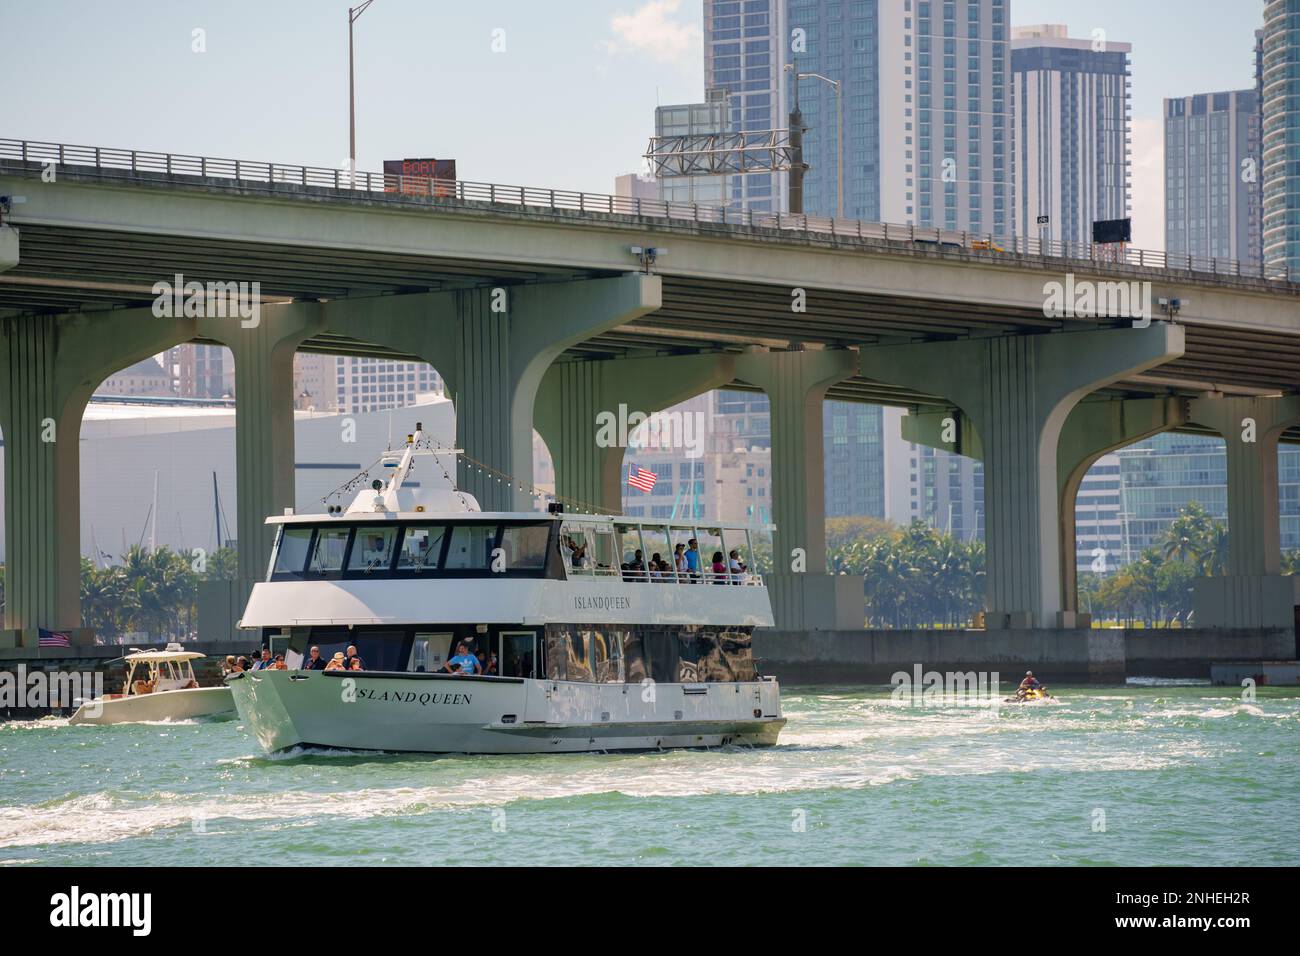 Miami, FL, USA - February 19, 2023: Miami Island Queen tour boat with view of bridge and Downtown Miami in background Stock Photo